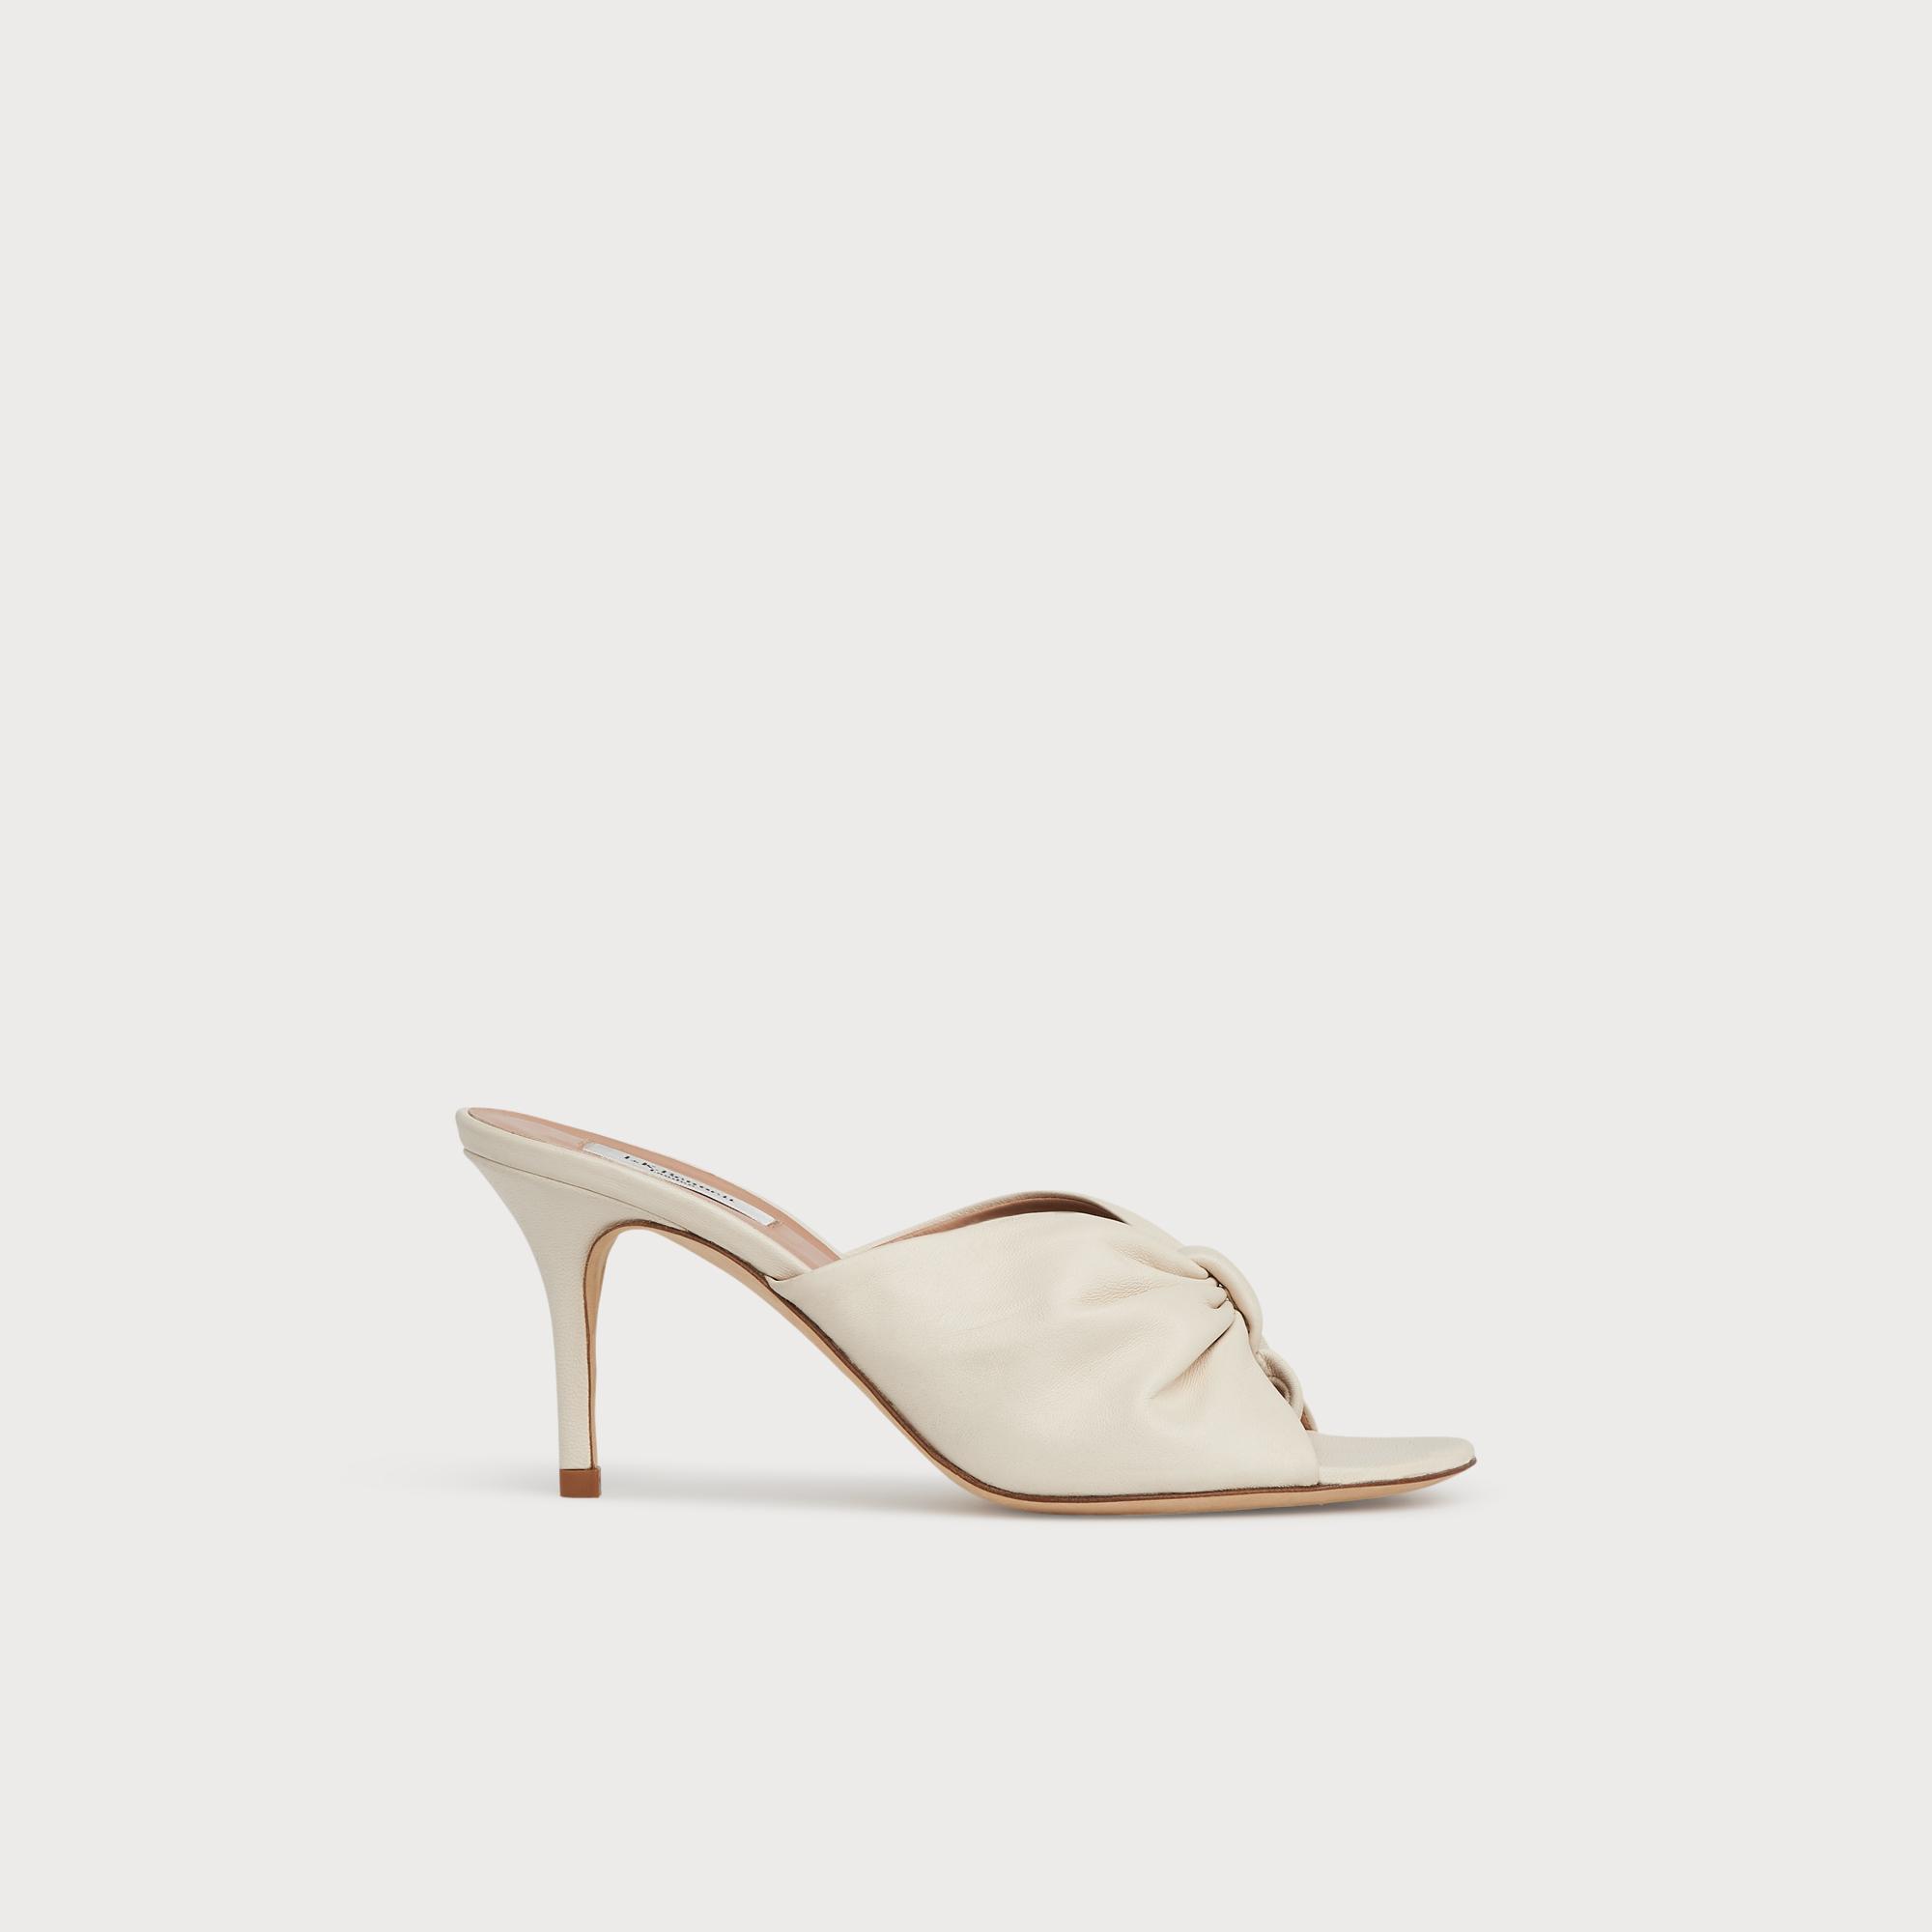 white leather kitten heel shoes